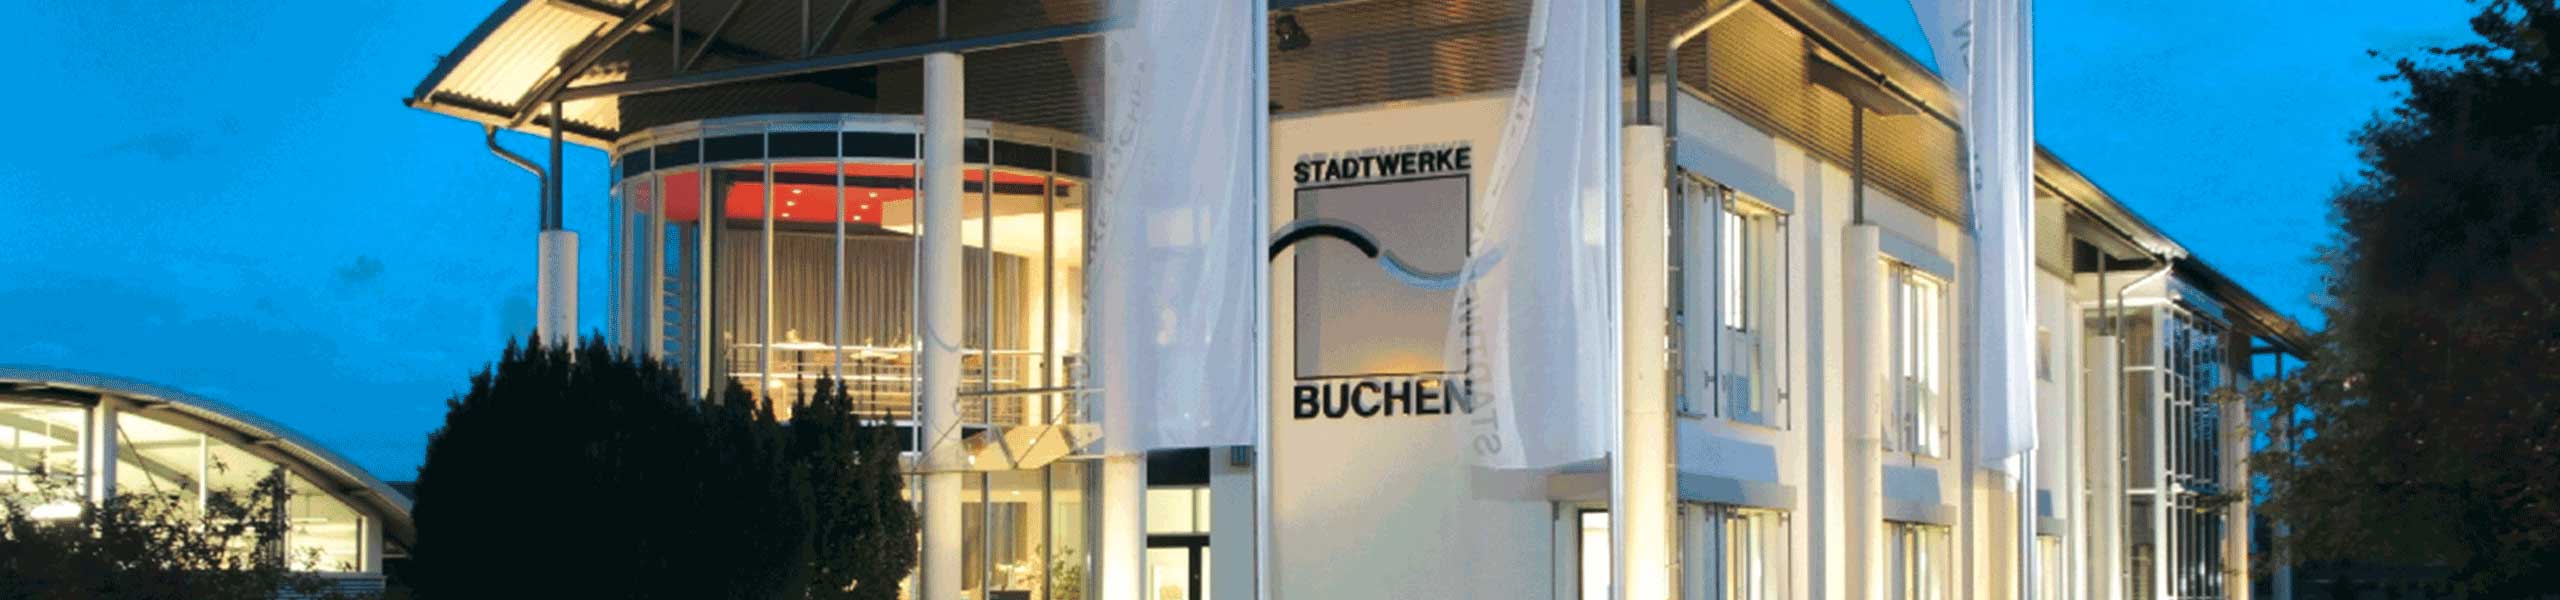 Stadtwerke Buchen GmbH & Co KG - Schülerpraktika